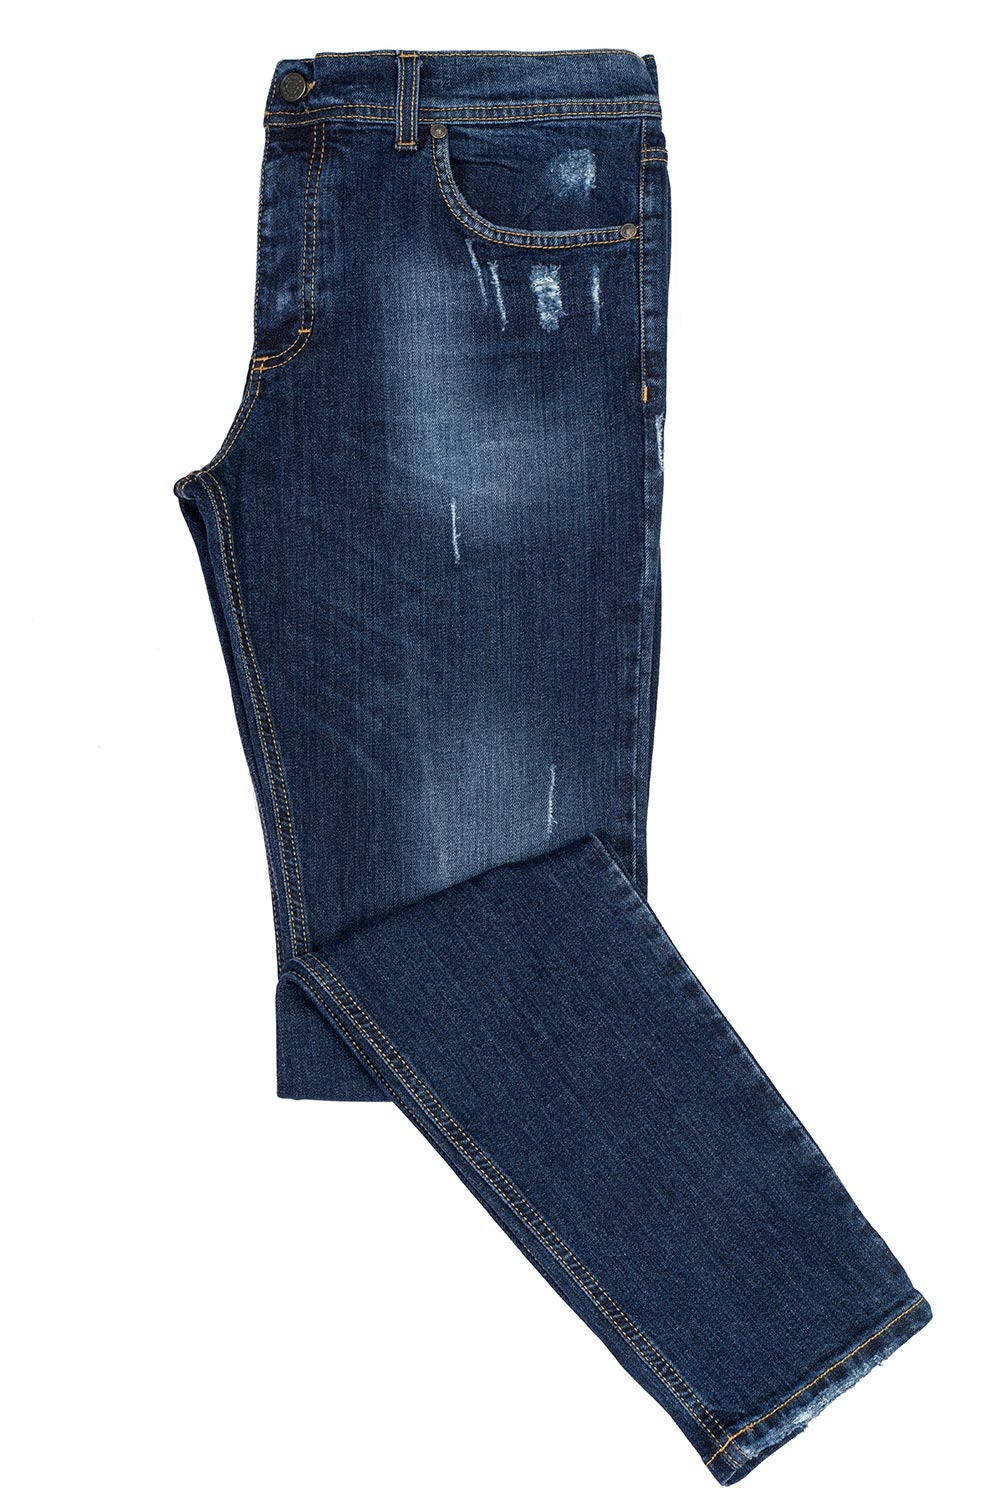 Blue jeans 0